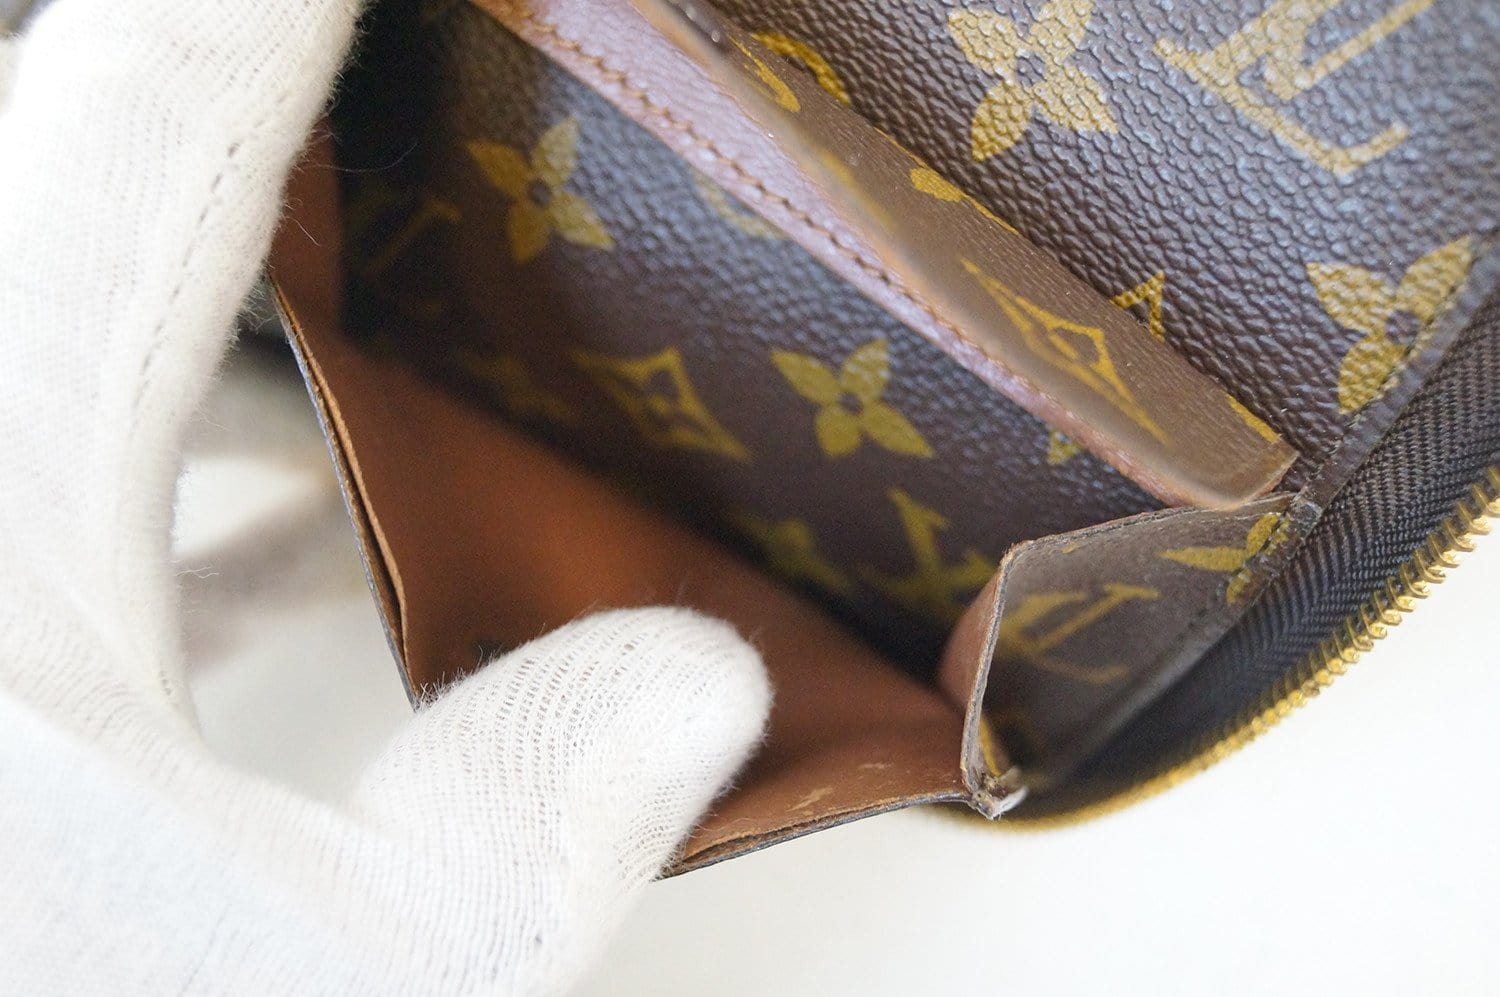 Review & What Fits Inside the Louis Vuitton Escapade/ Escovedo